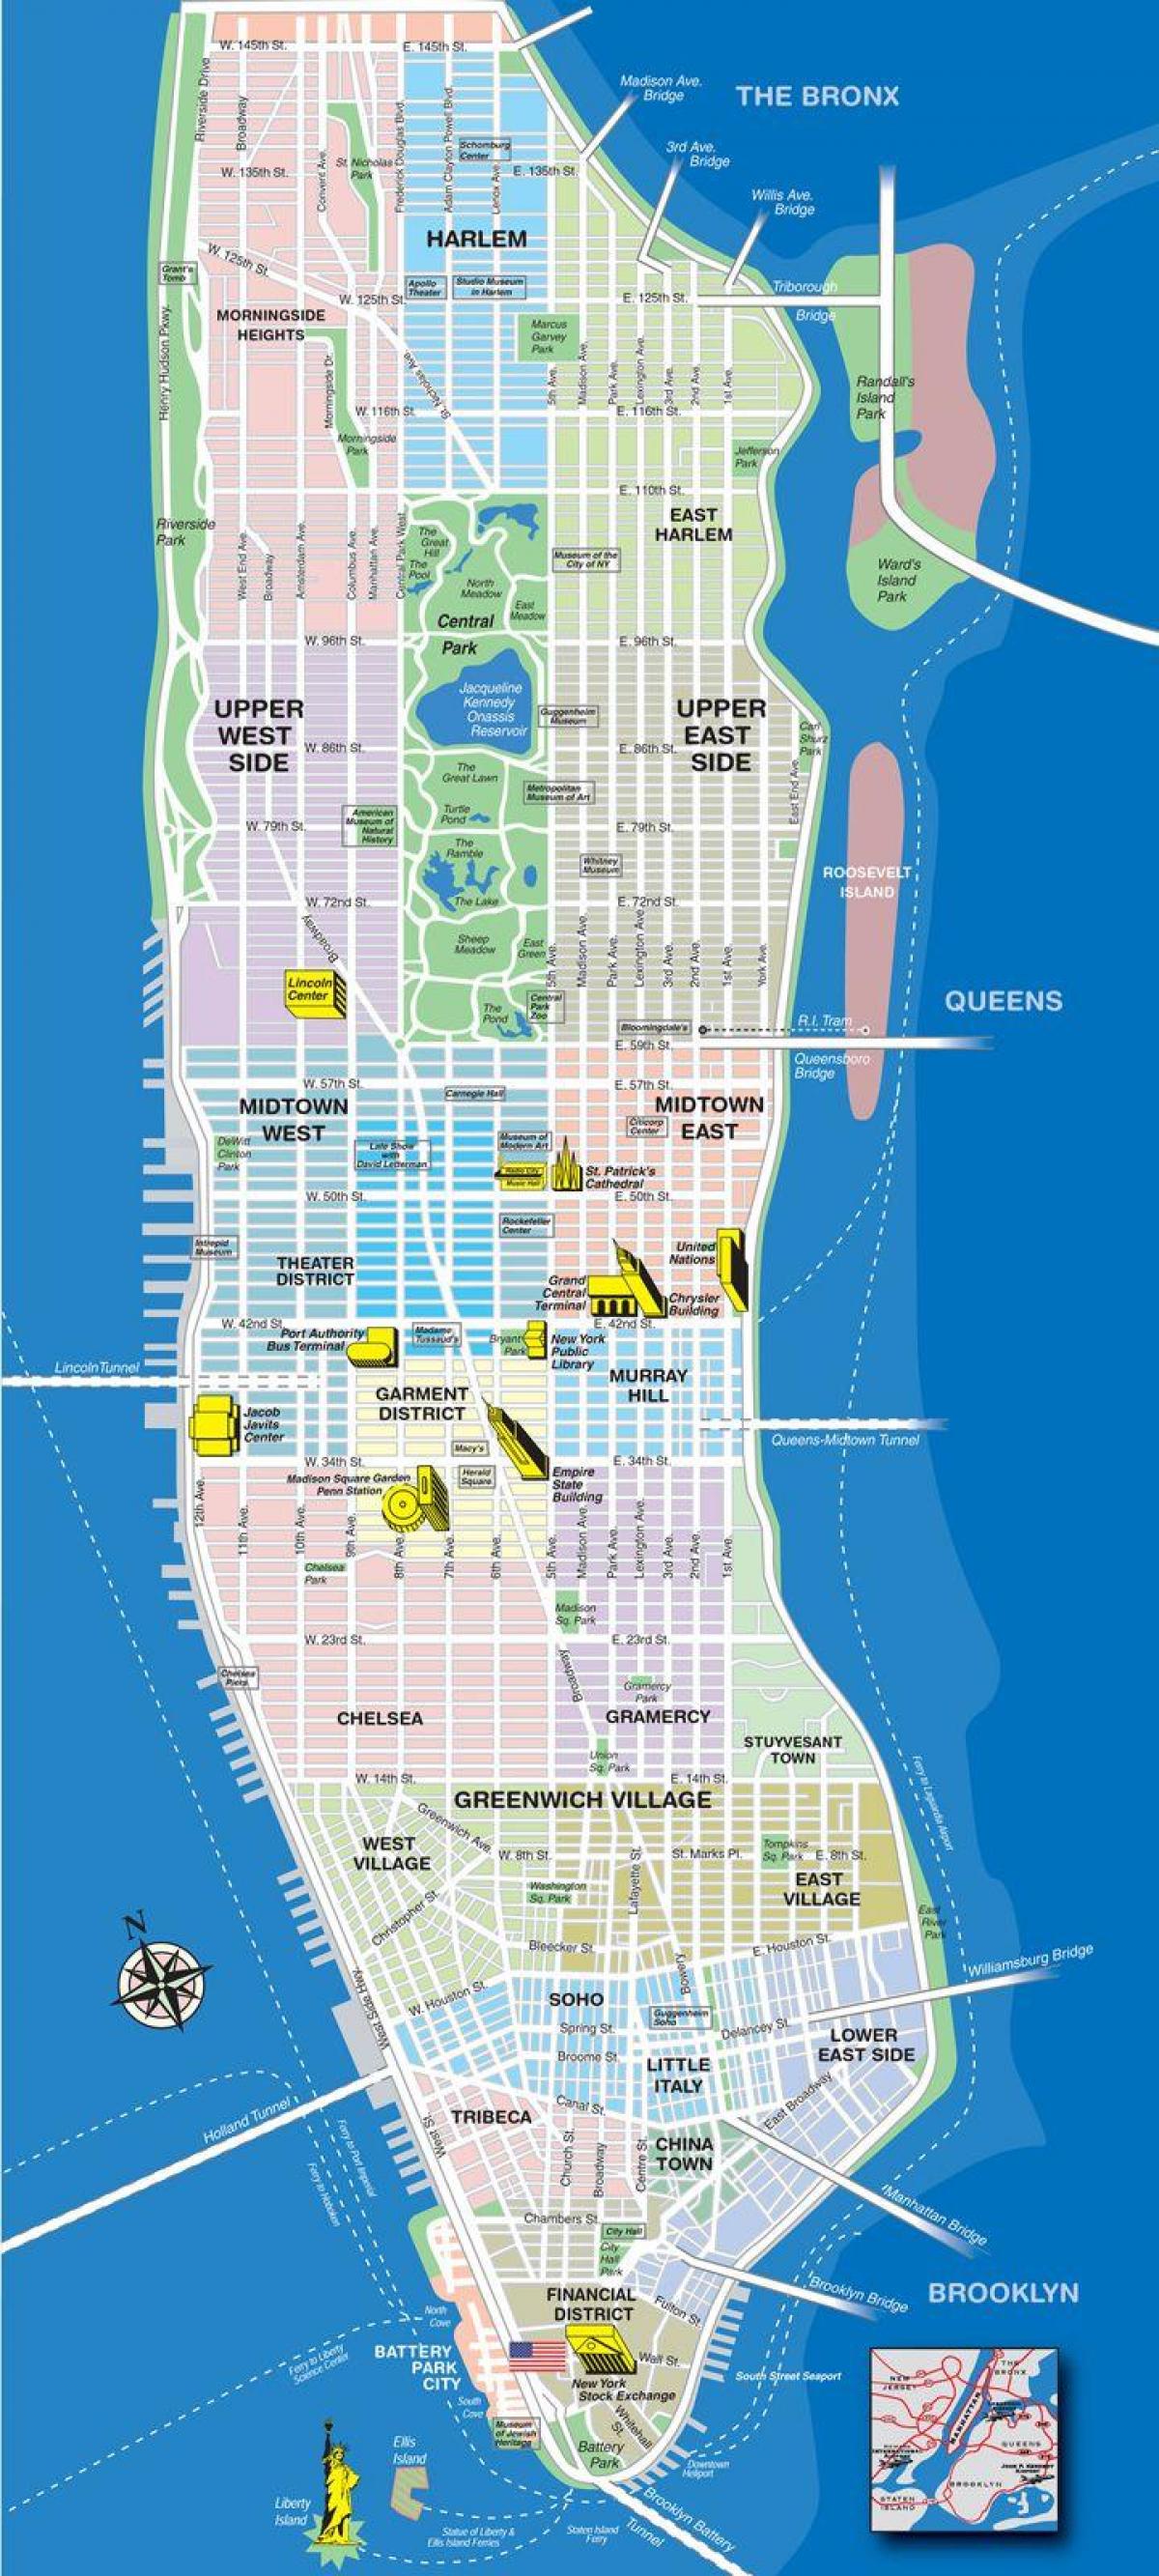 et kort over Manhattan